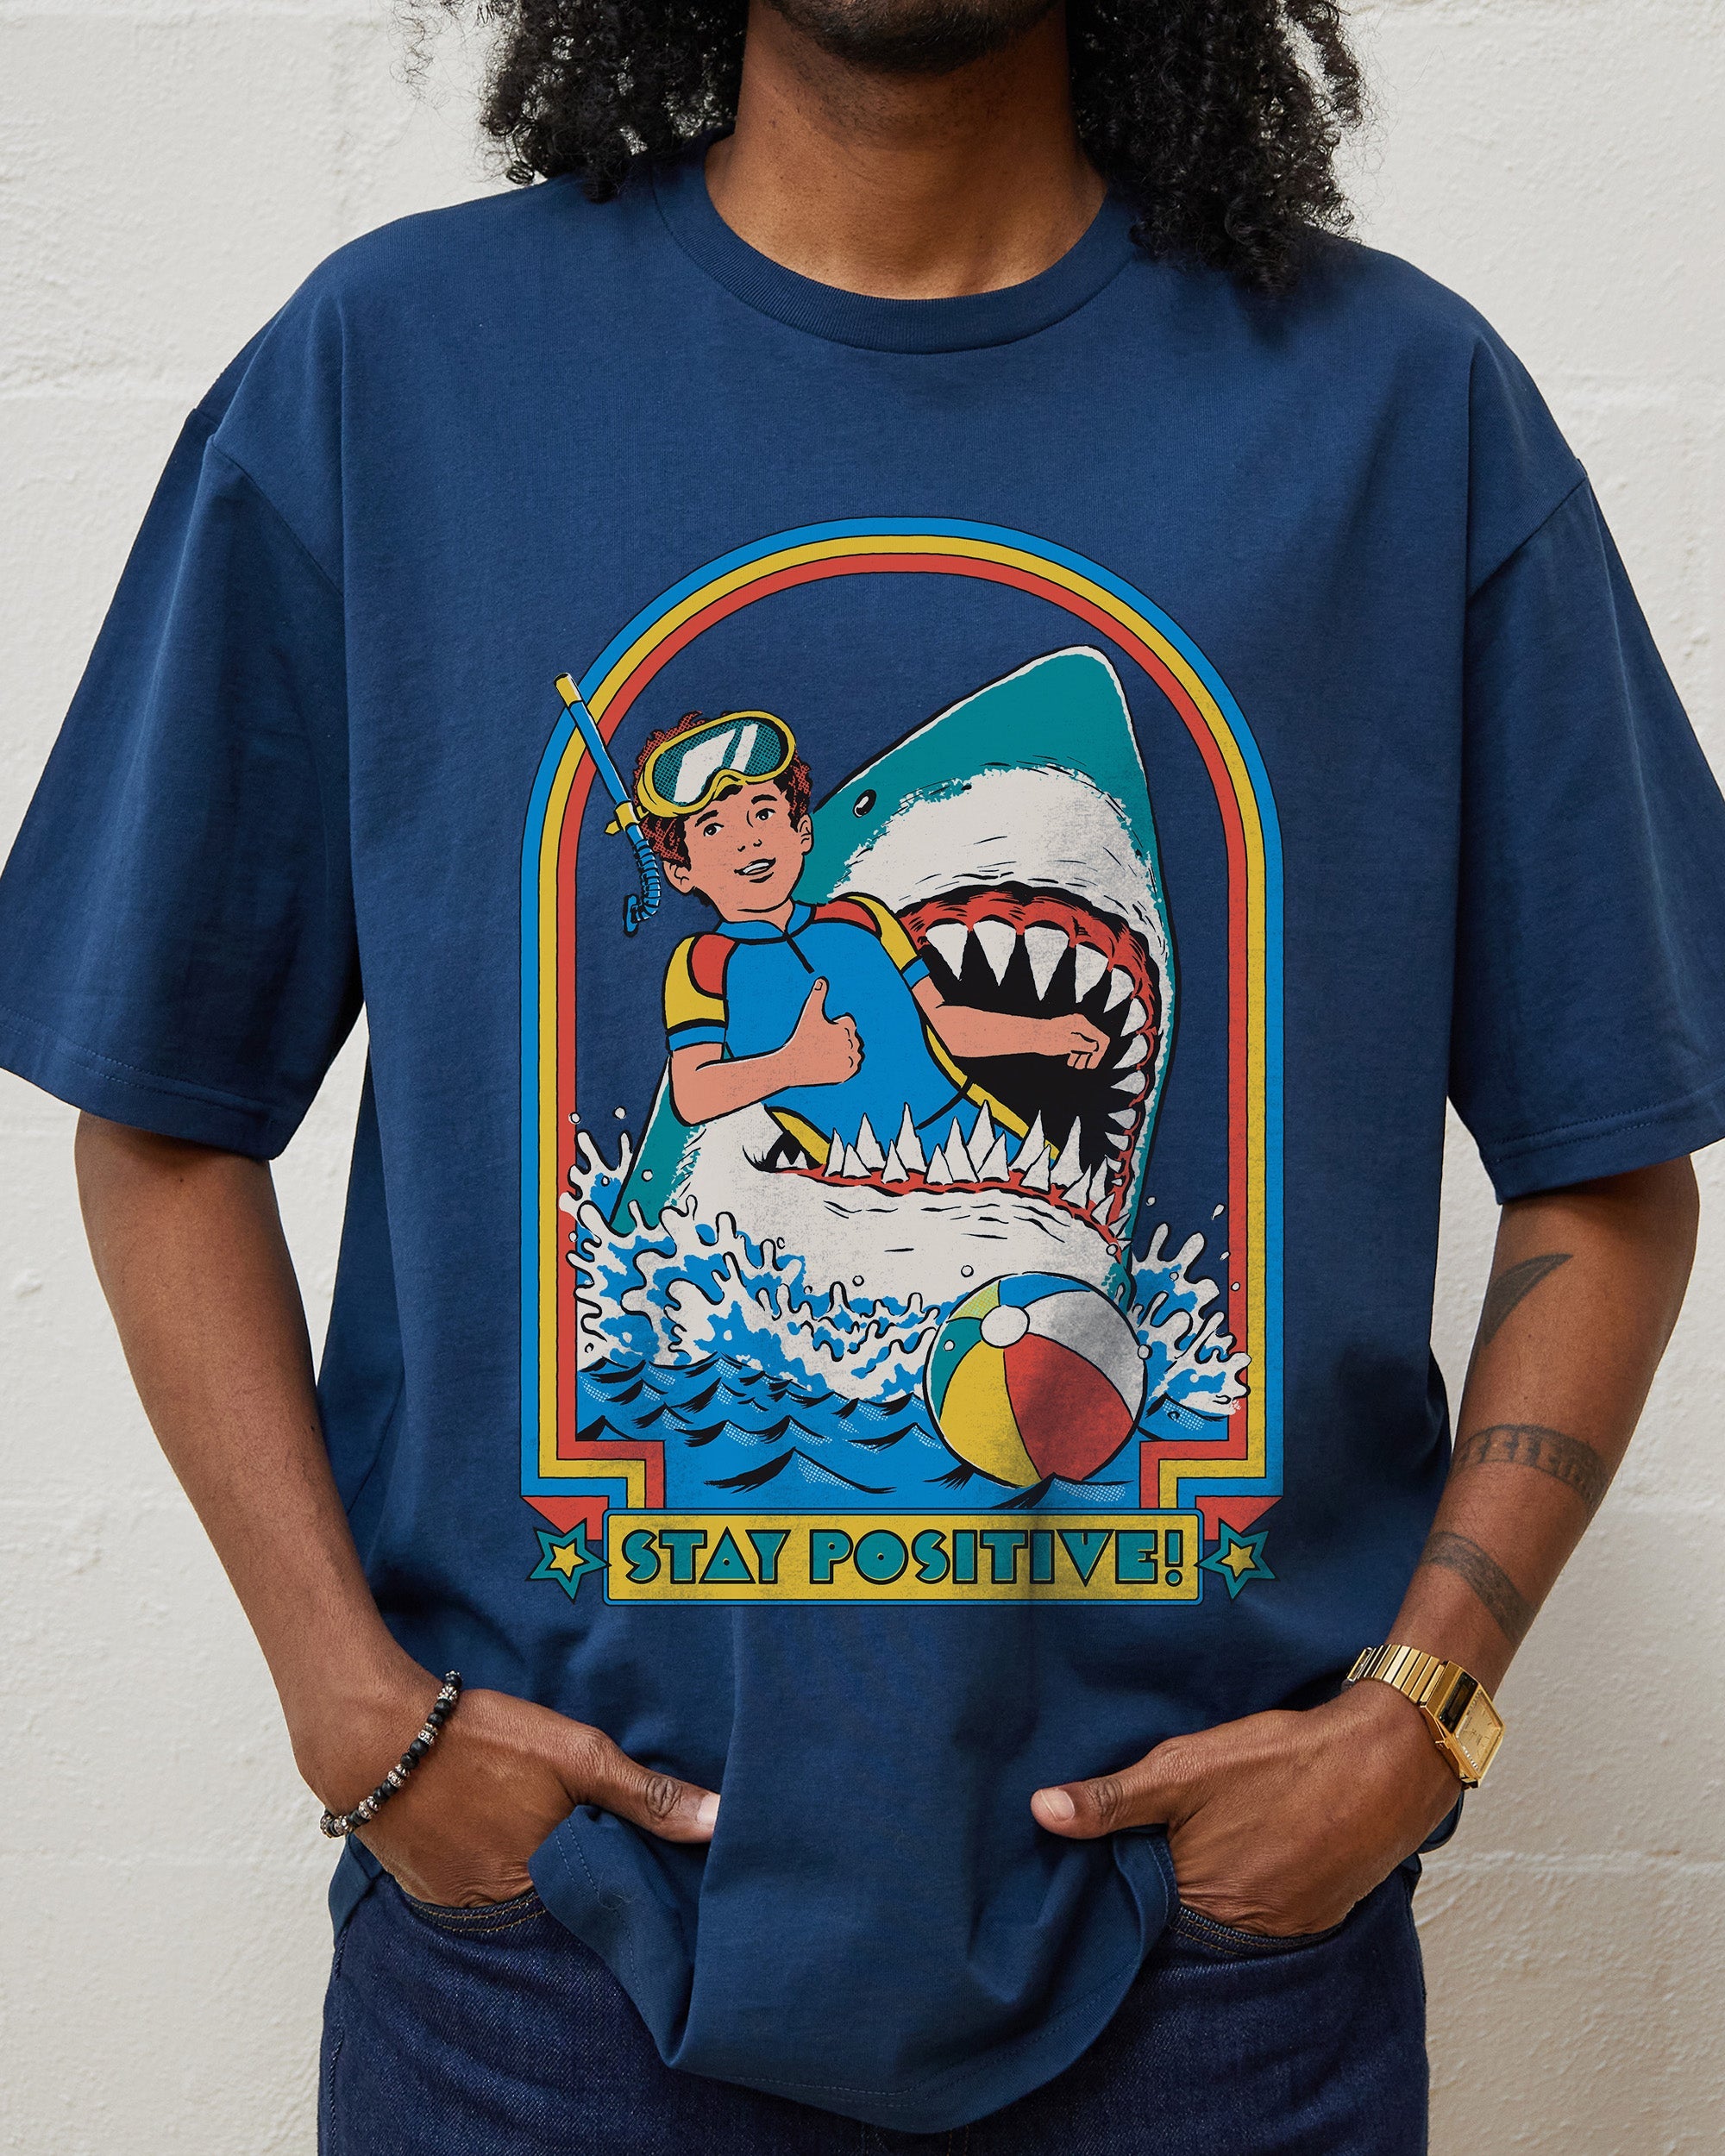 Stay Positive T-Shirt Australia Online Navy